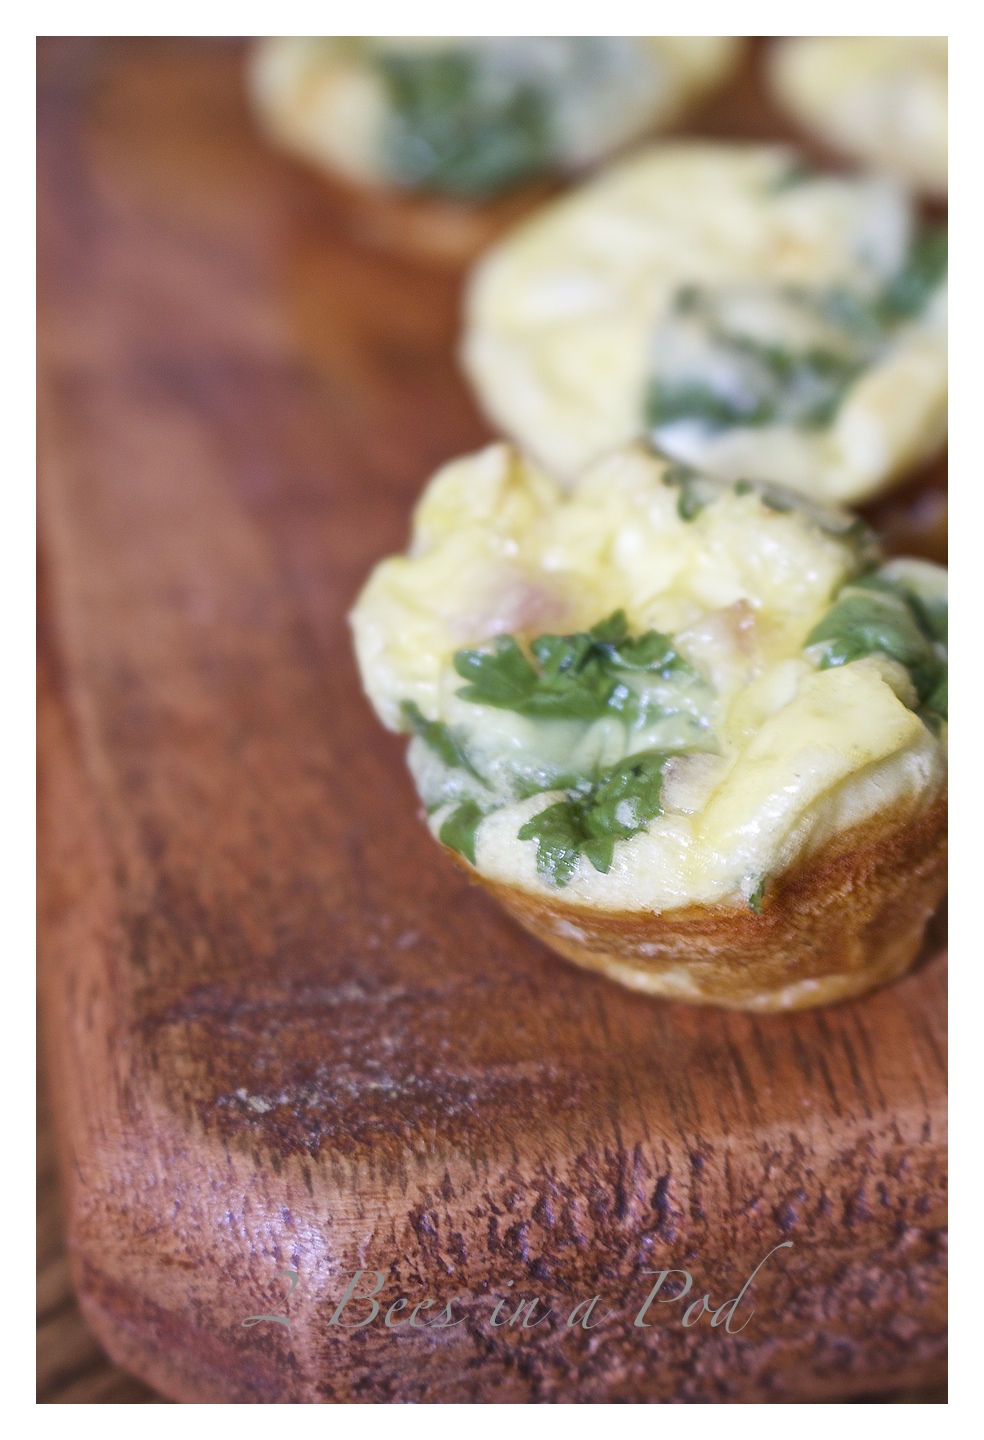 Mini Frittata - a prefect make ahead breakfast - makes 24 mini frittatas in a muffin tins